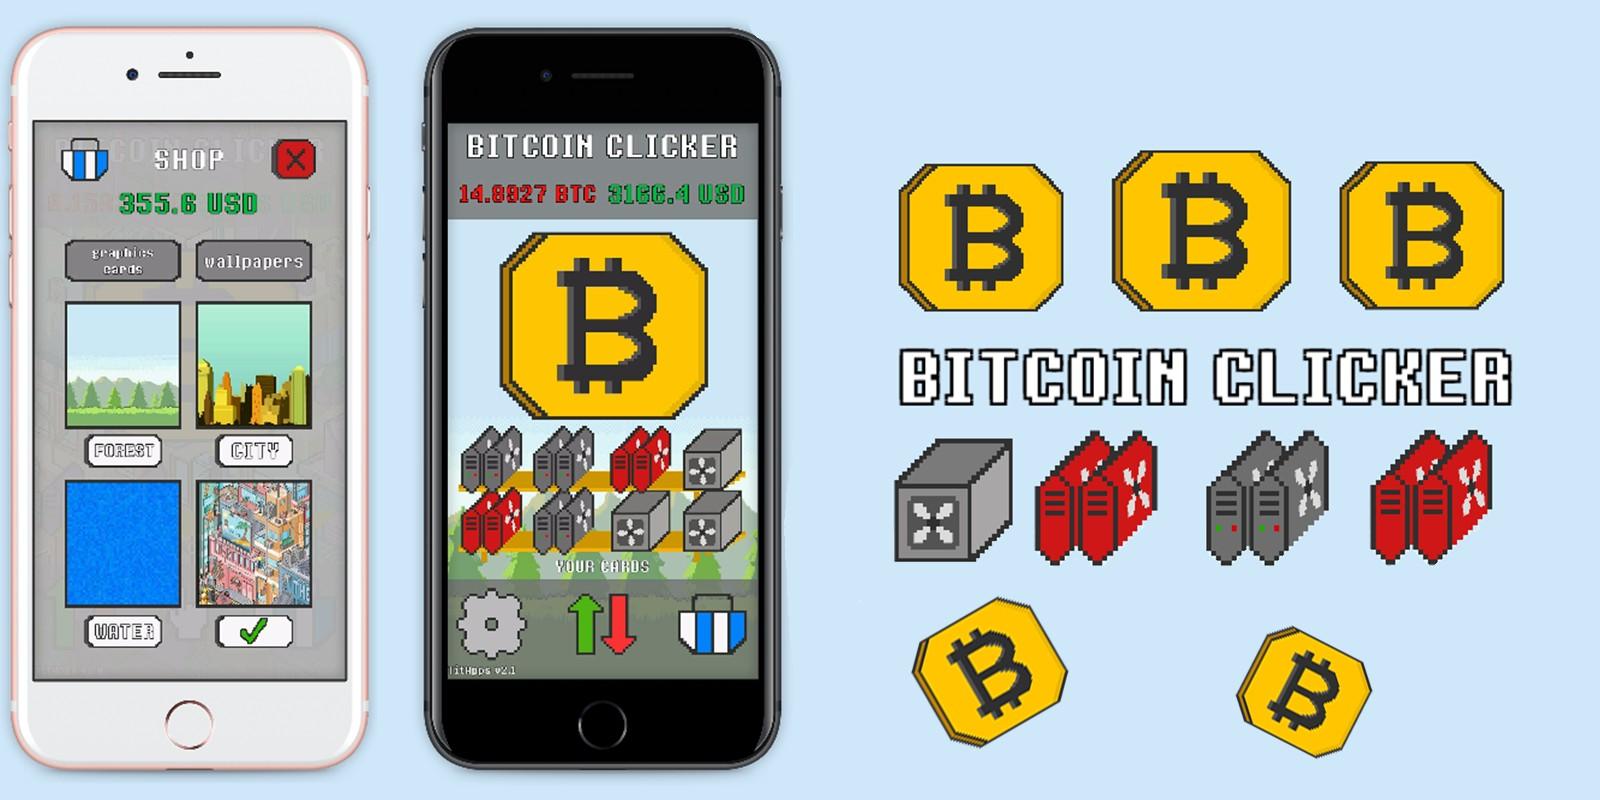 Bitcoin clicker gift code crypto cmd process on linux